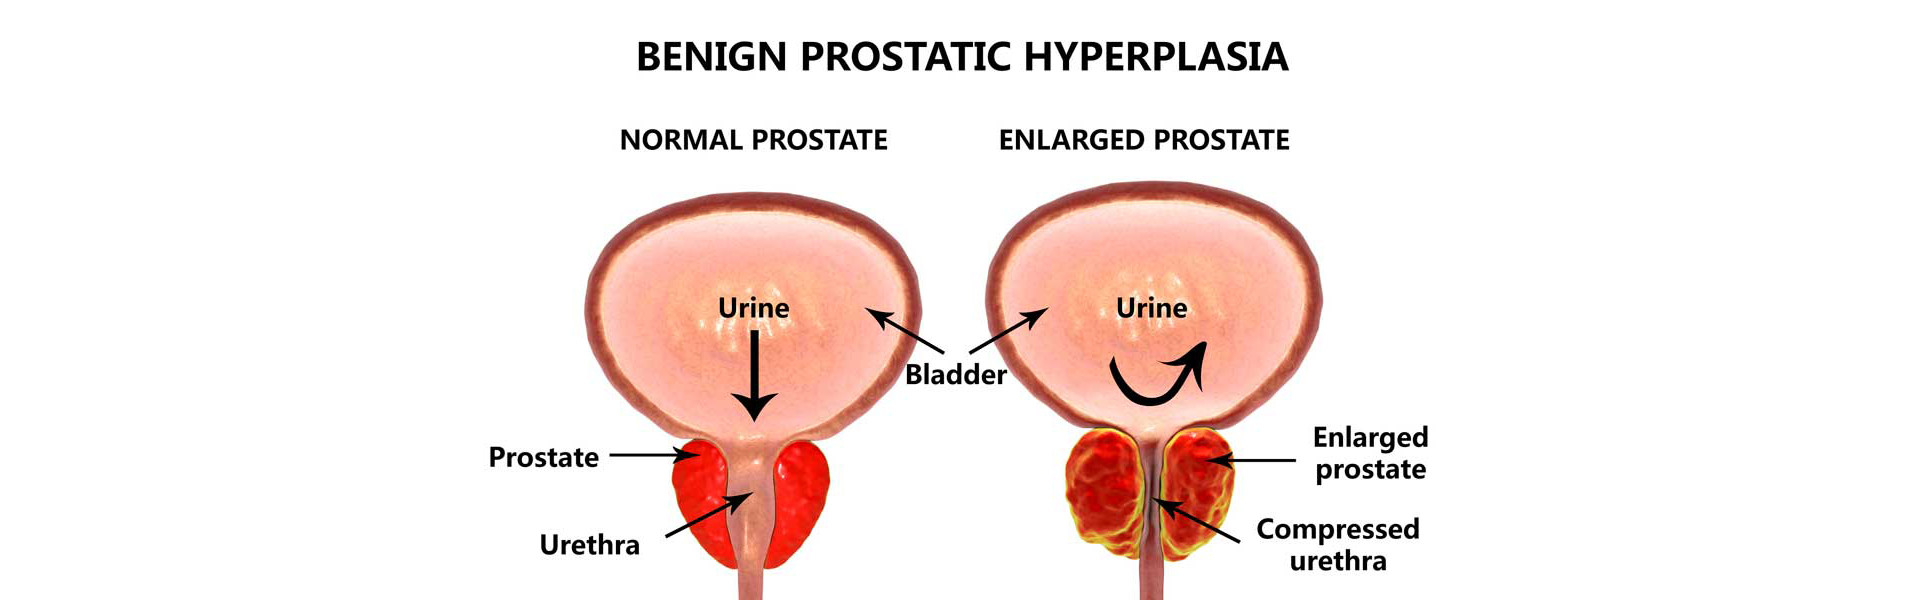 unilateral prostate enlargement cancer prostata tratamento hormonal